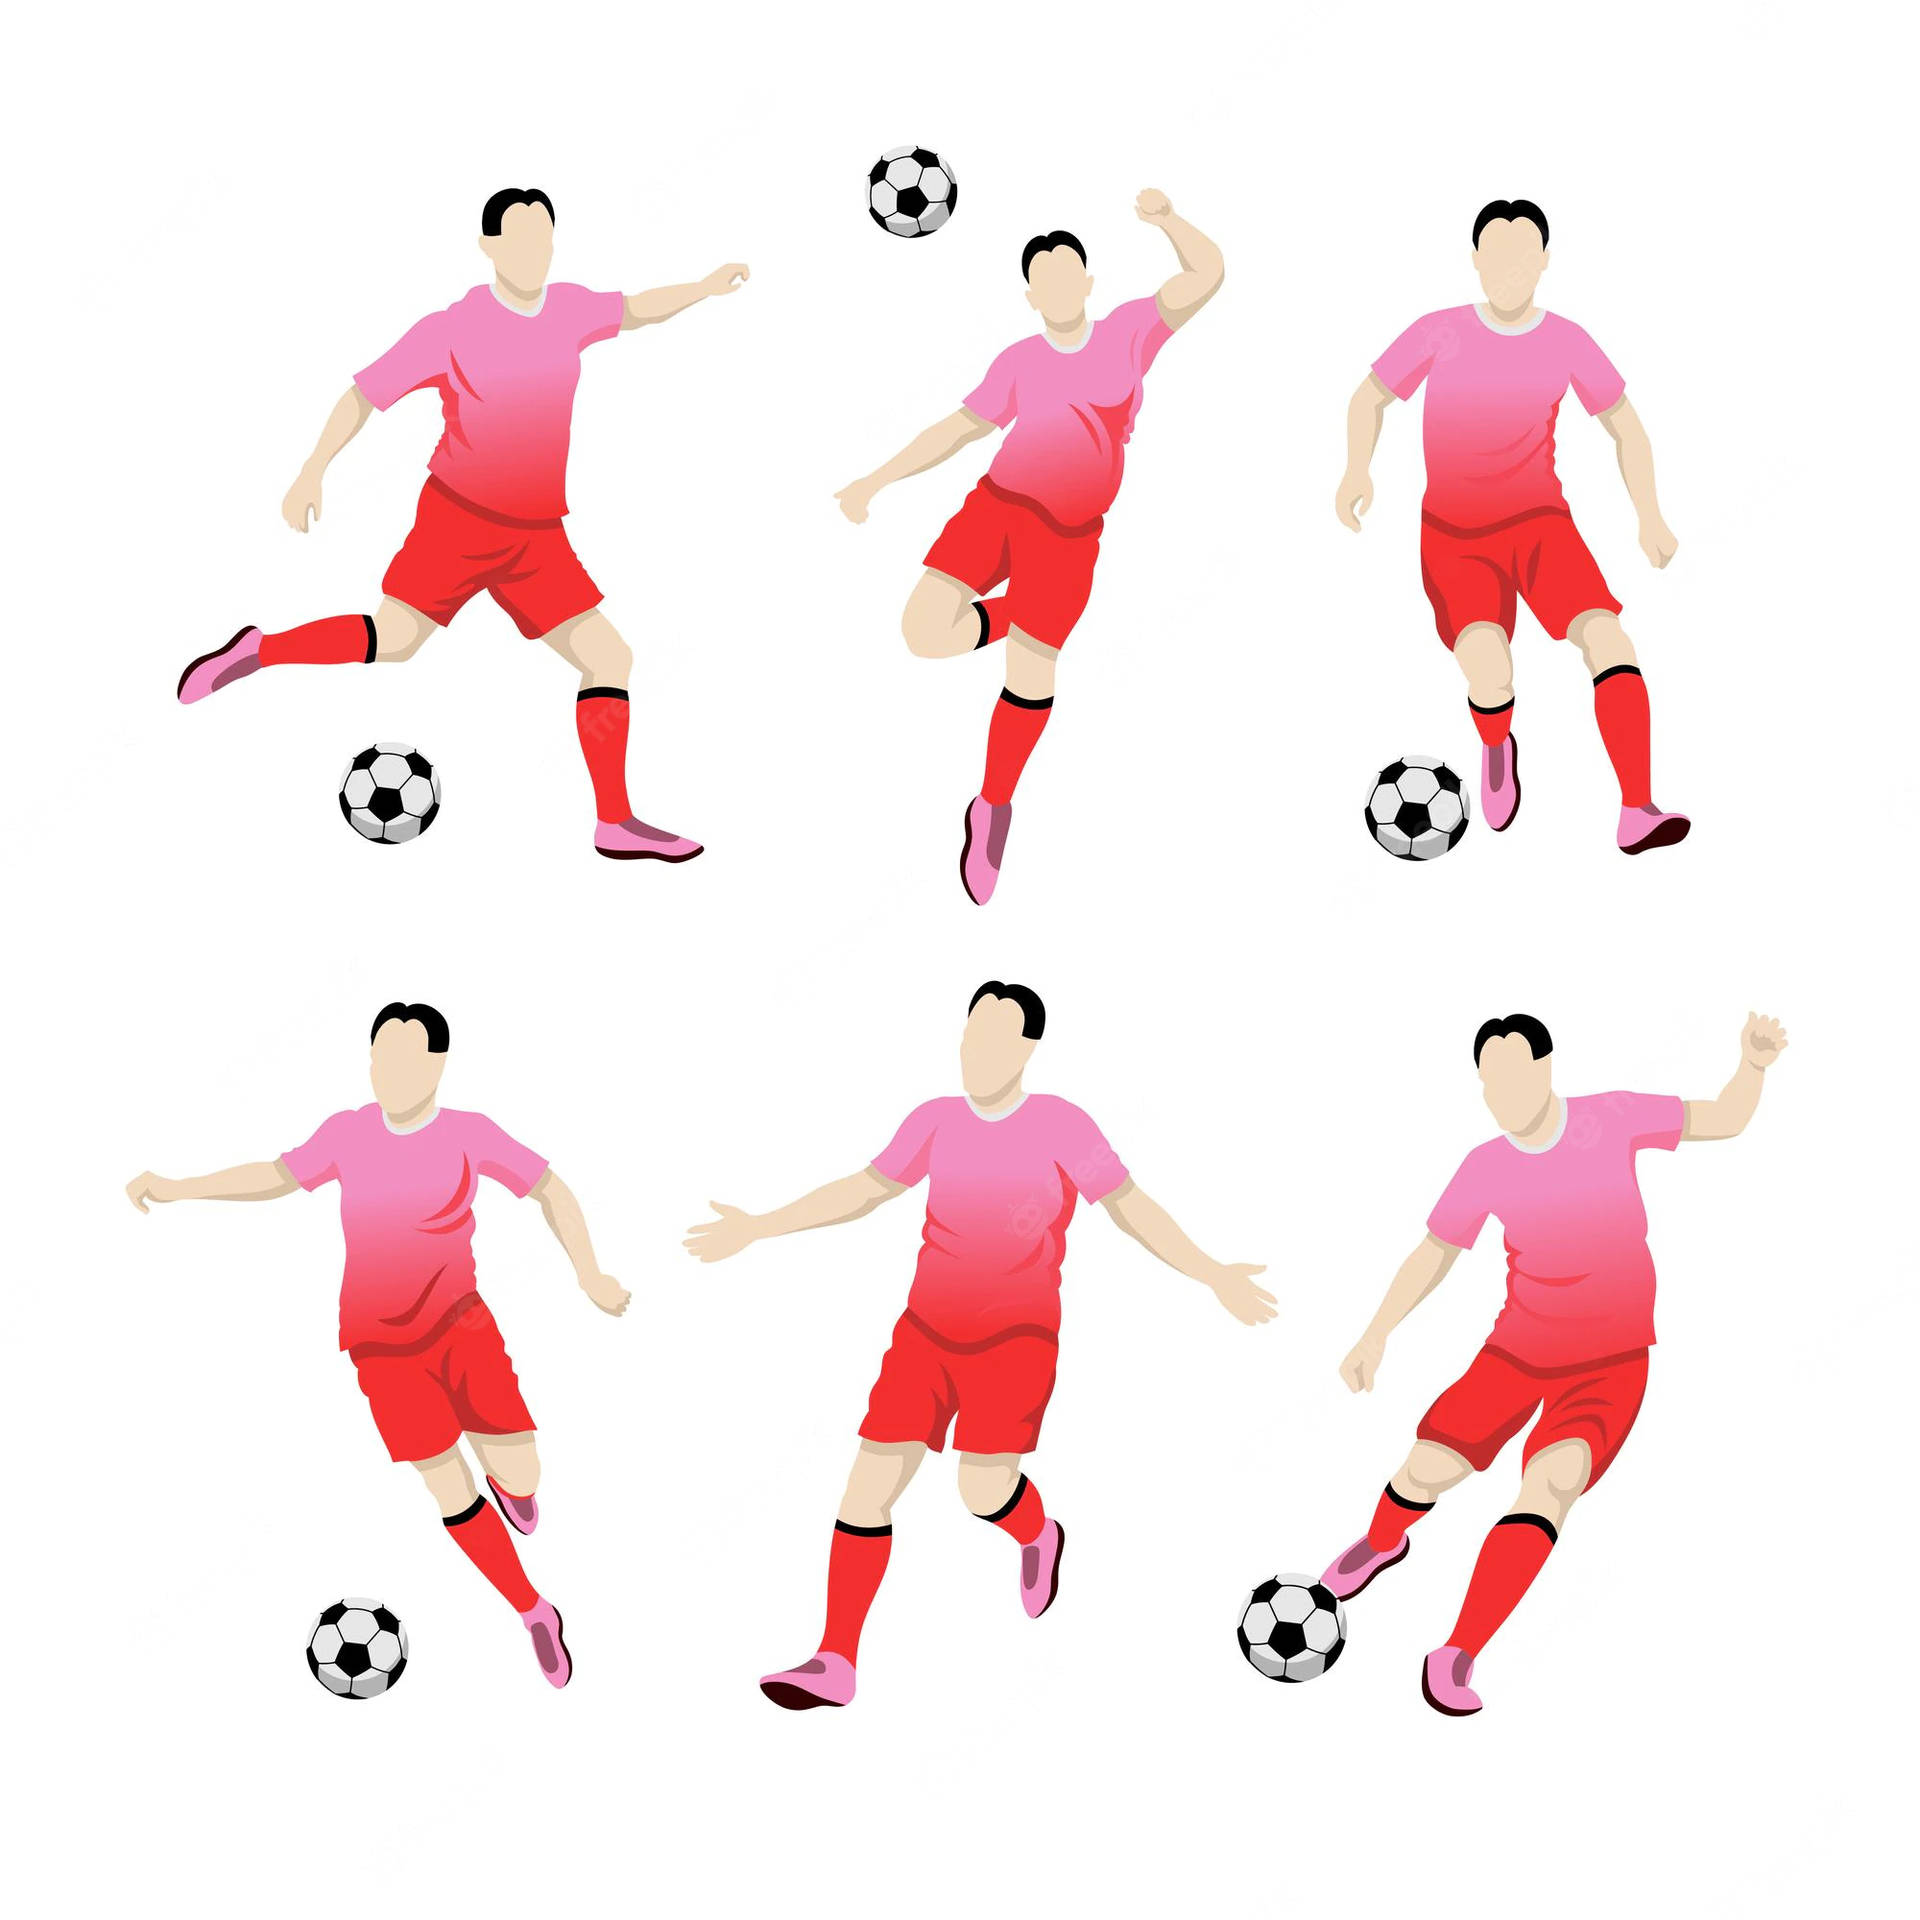 Korea Republic National Football Team Art Wallpaper